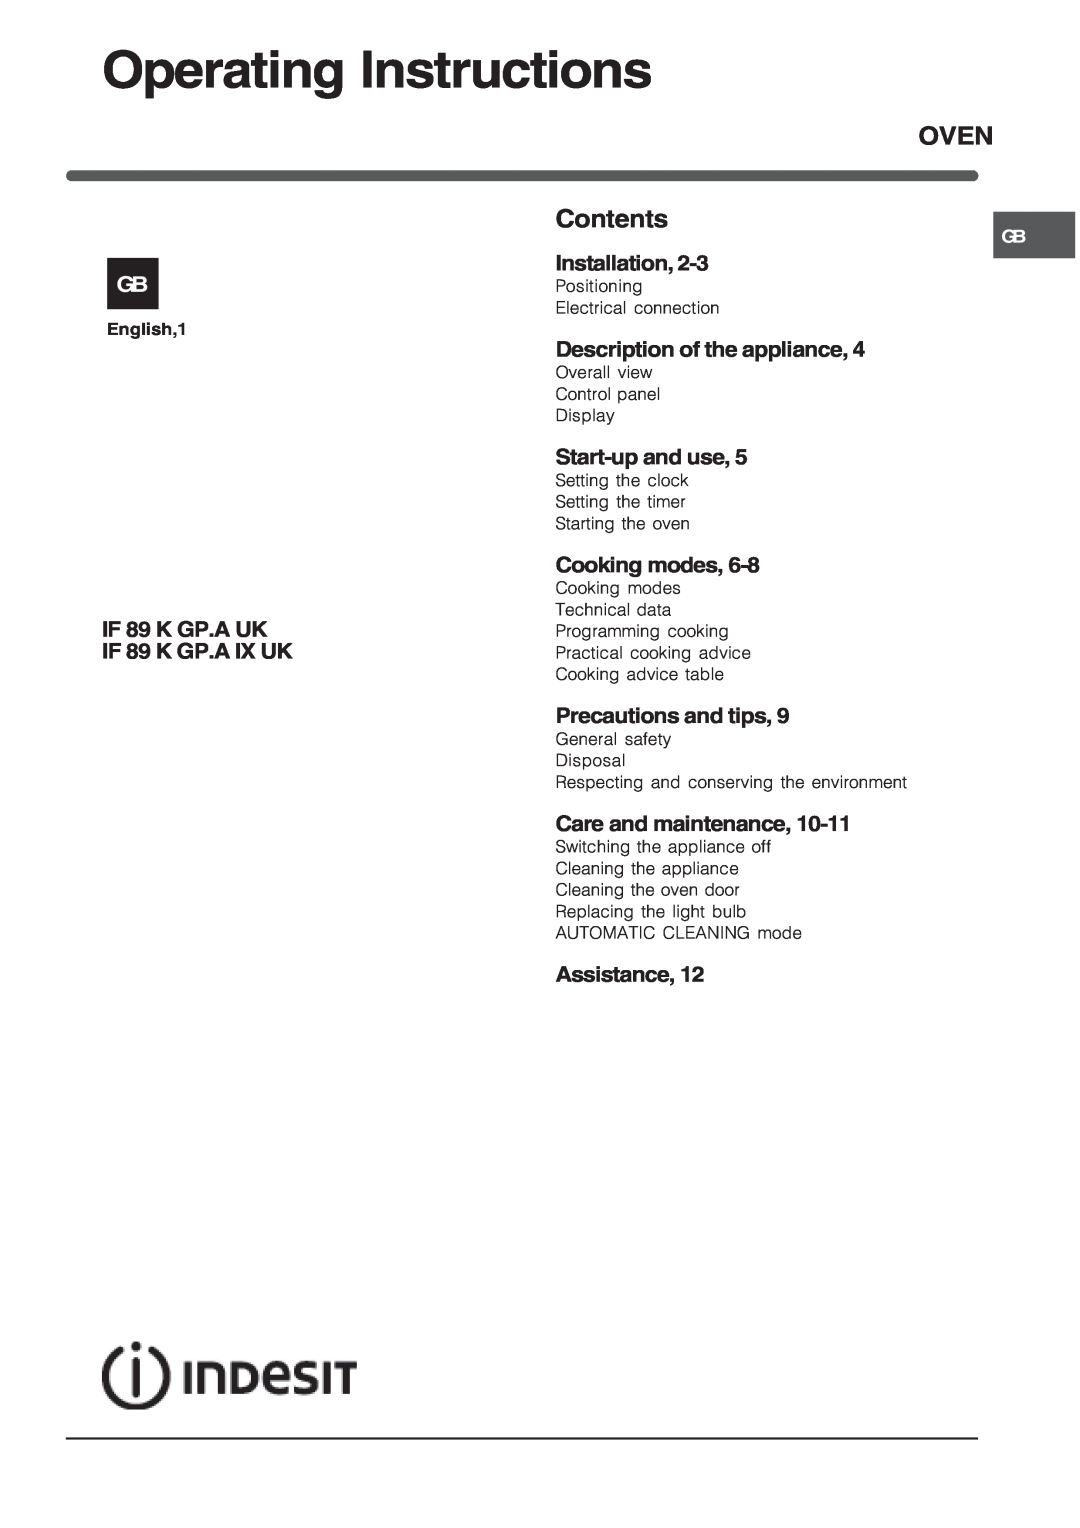 Indesit I. 89 K GP.A IX UK manual Operating Instructions, Installation, Description of the appliance, Start-upand use 